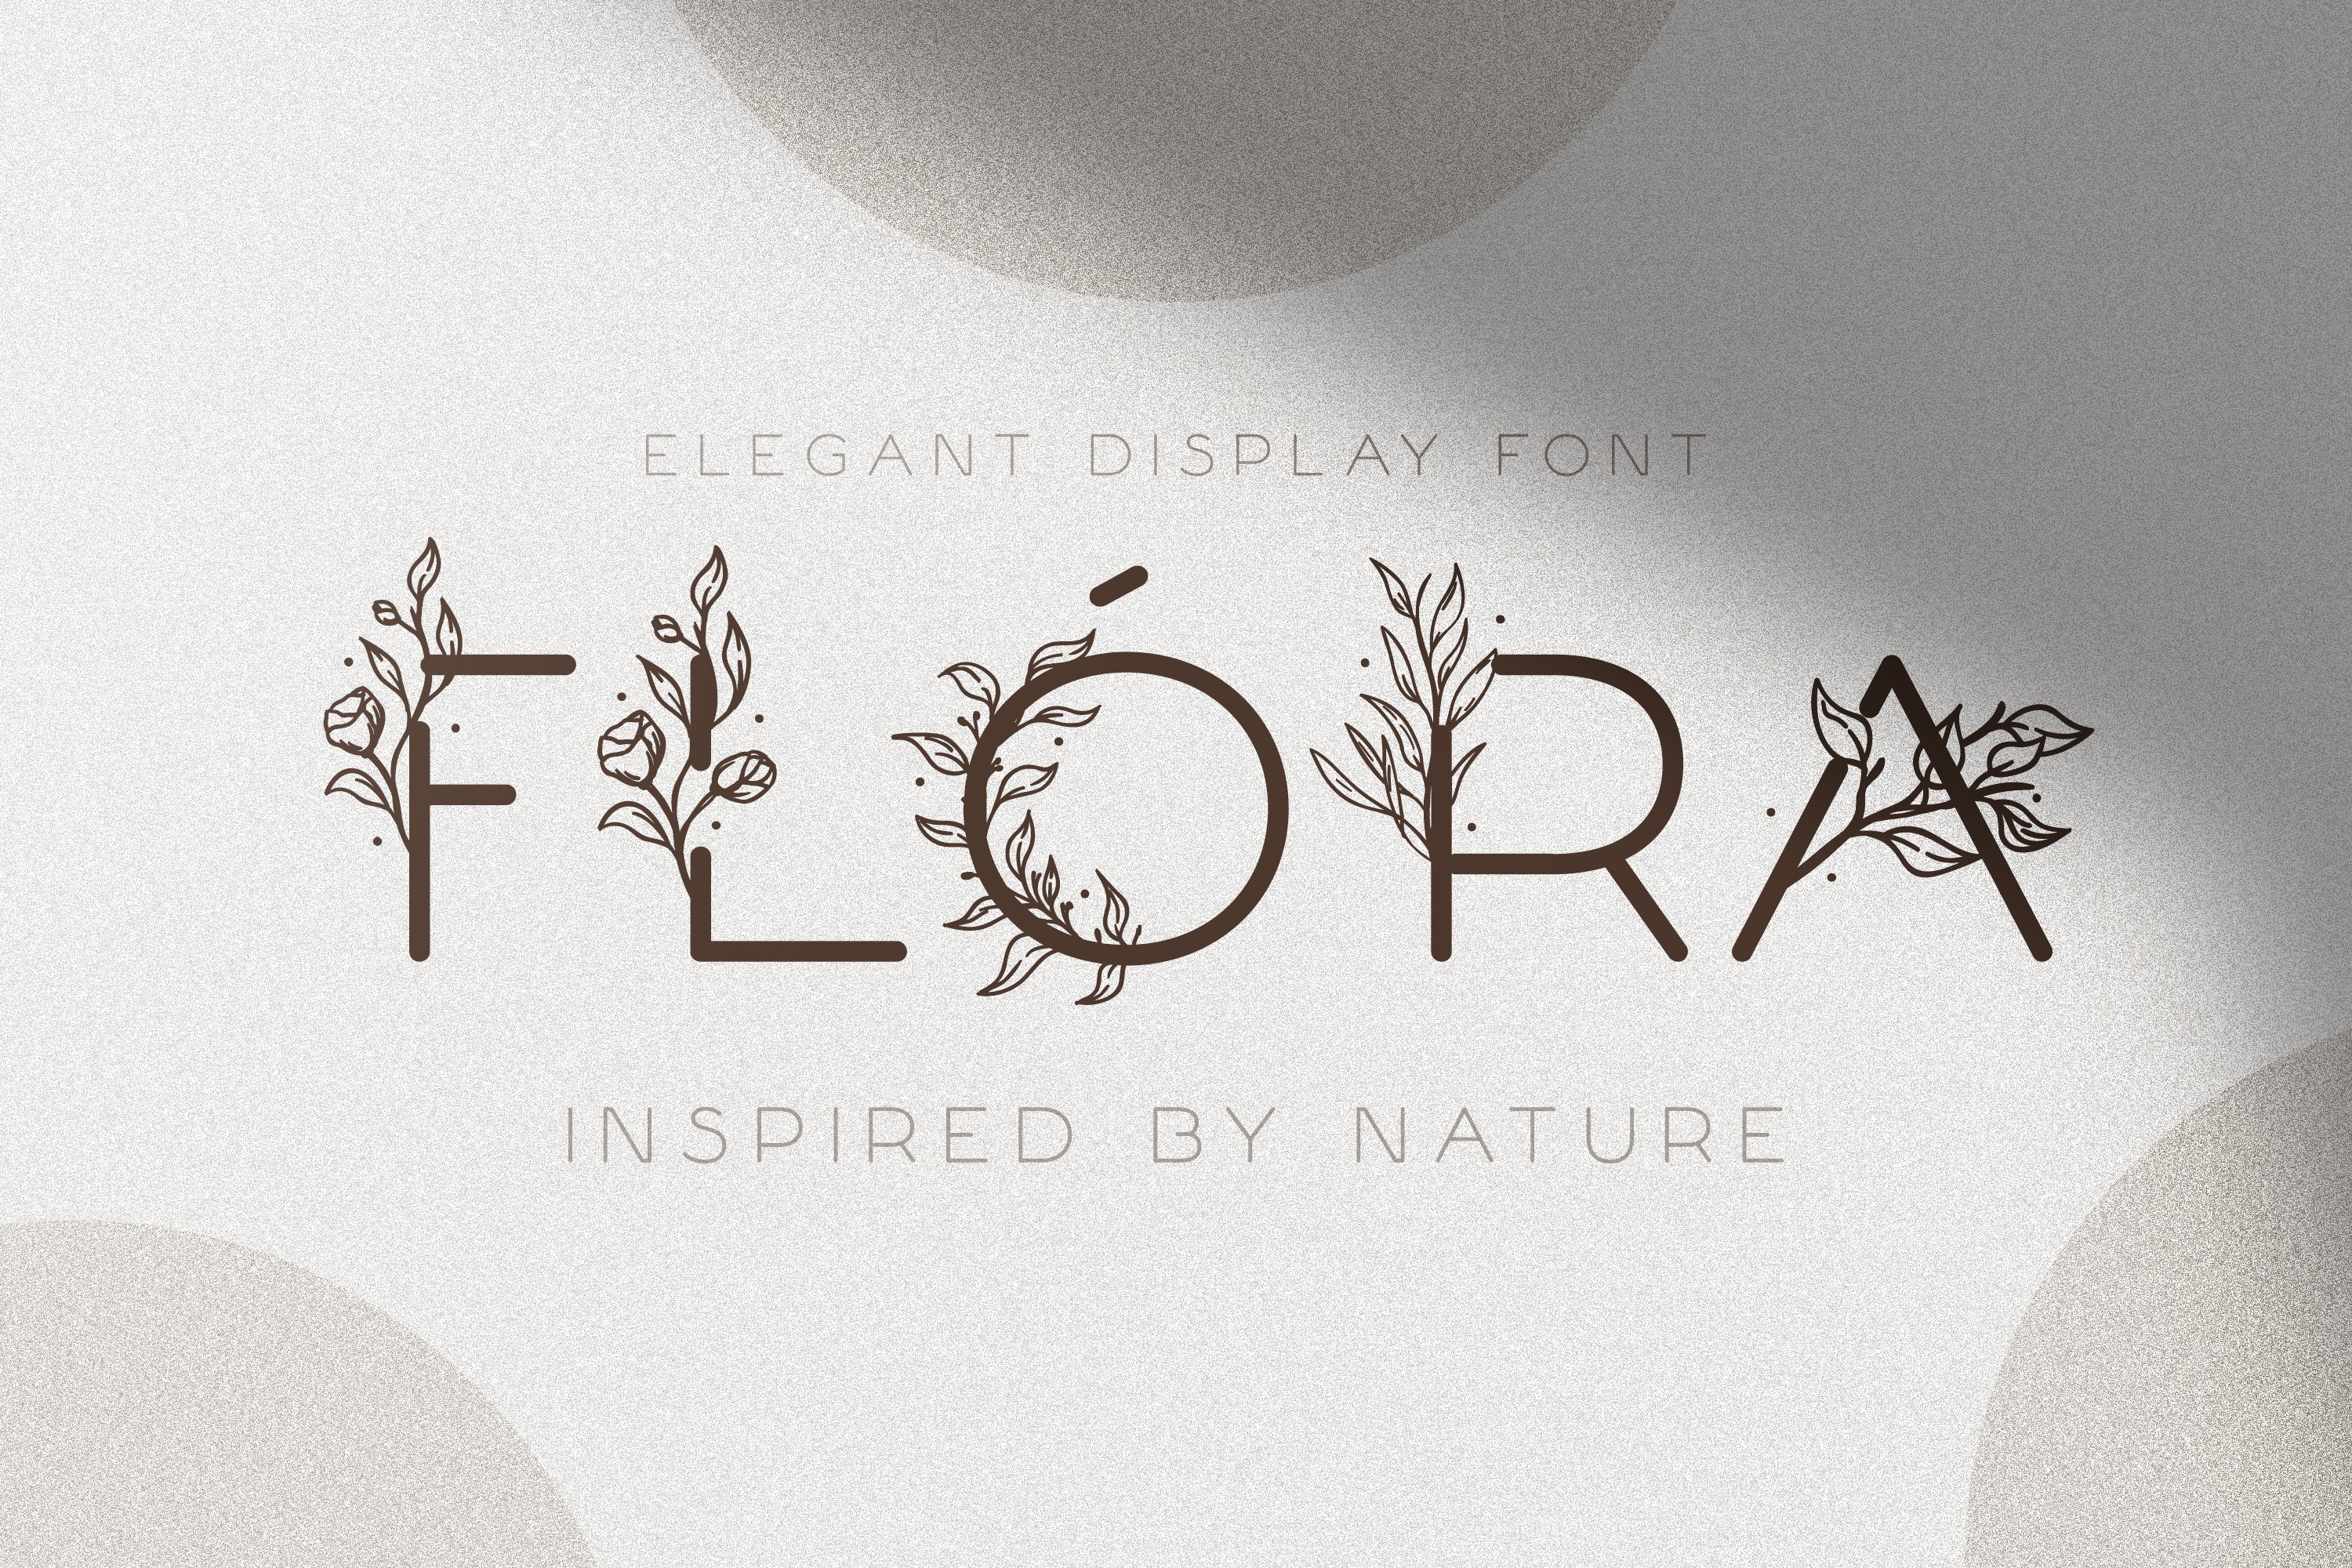 Flóra - A Delicate Floral Font cover image.